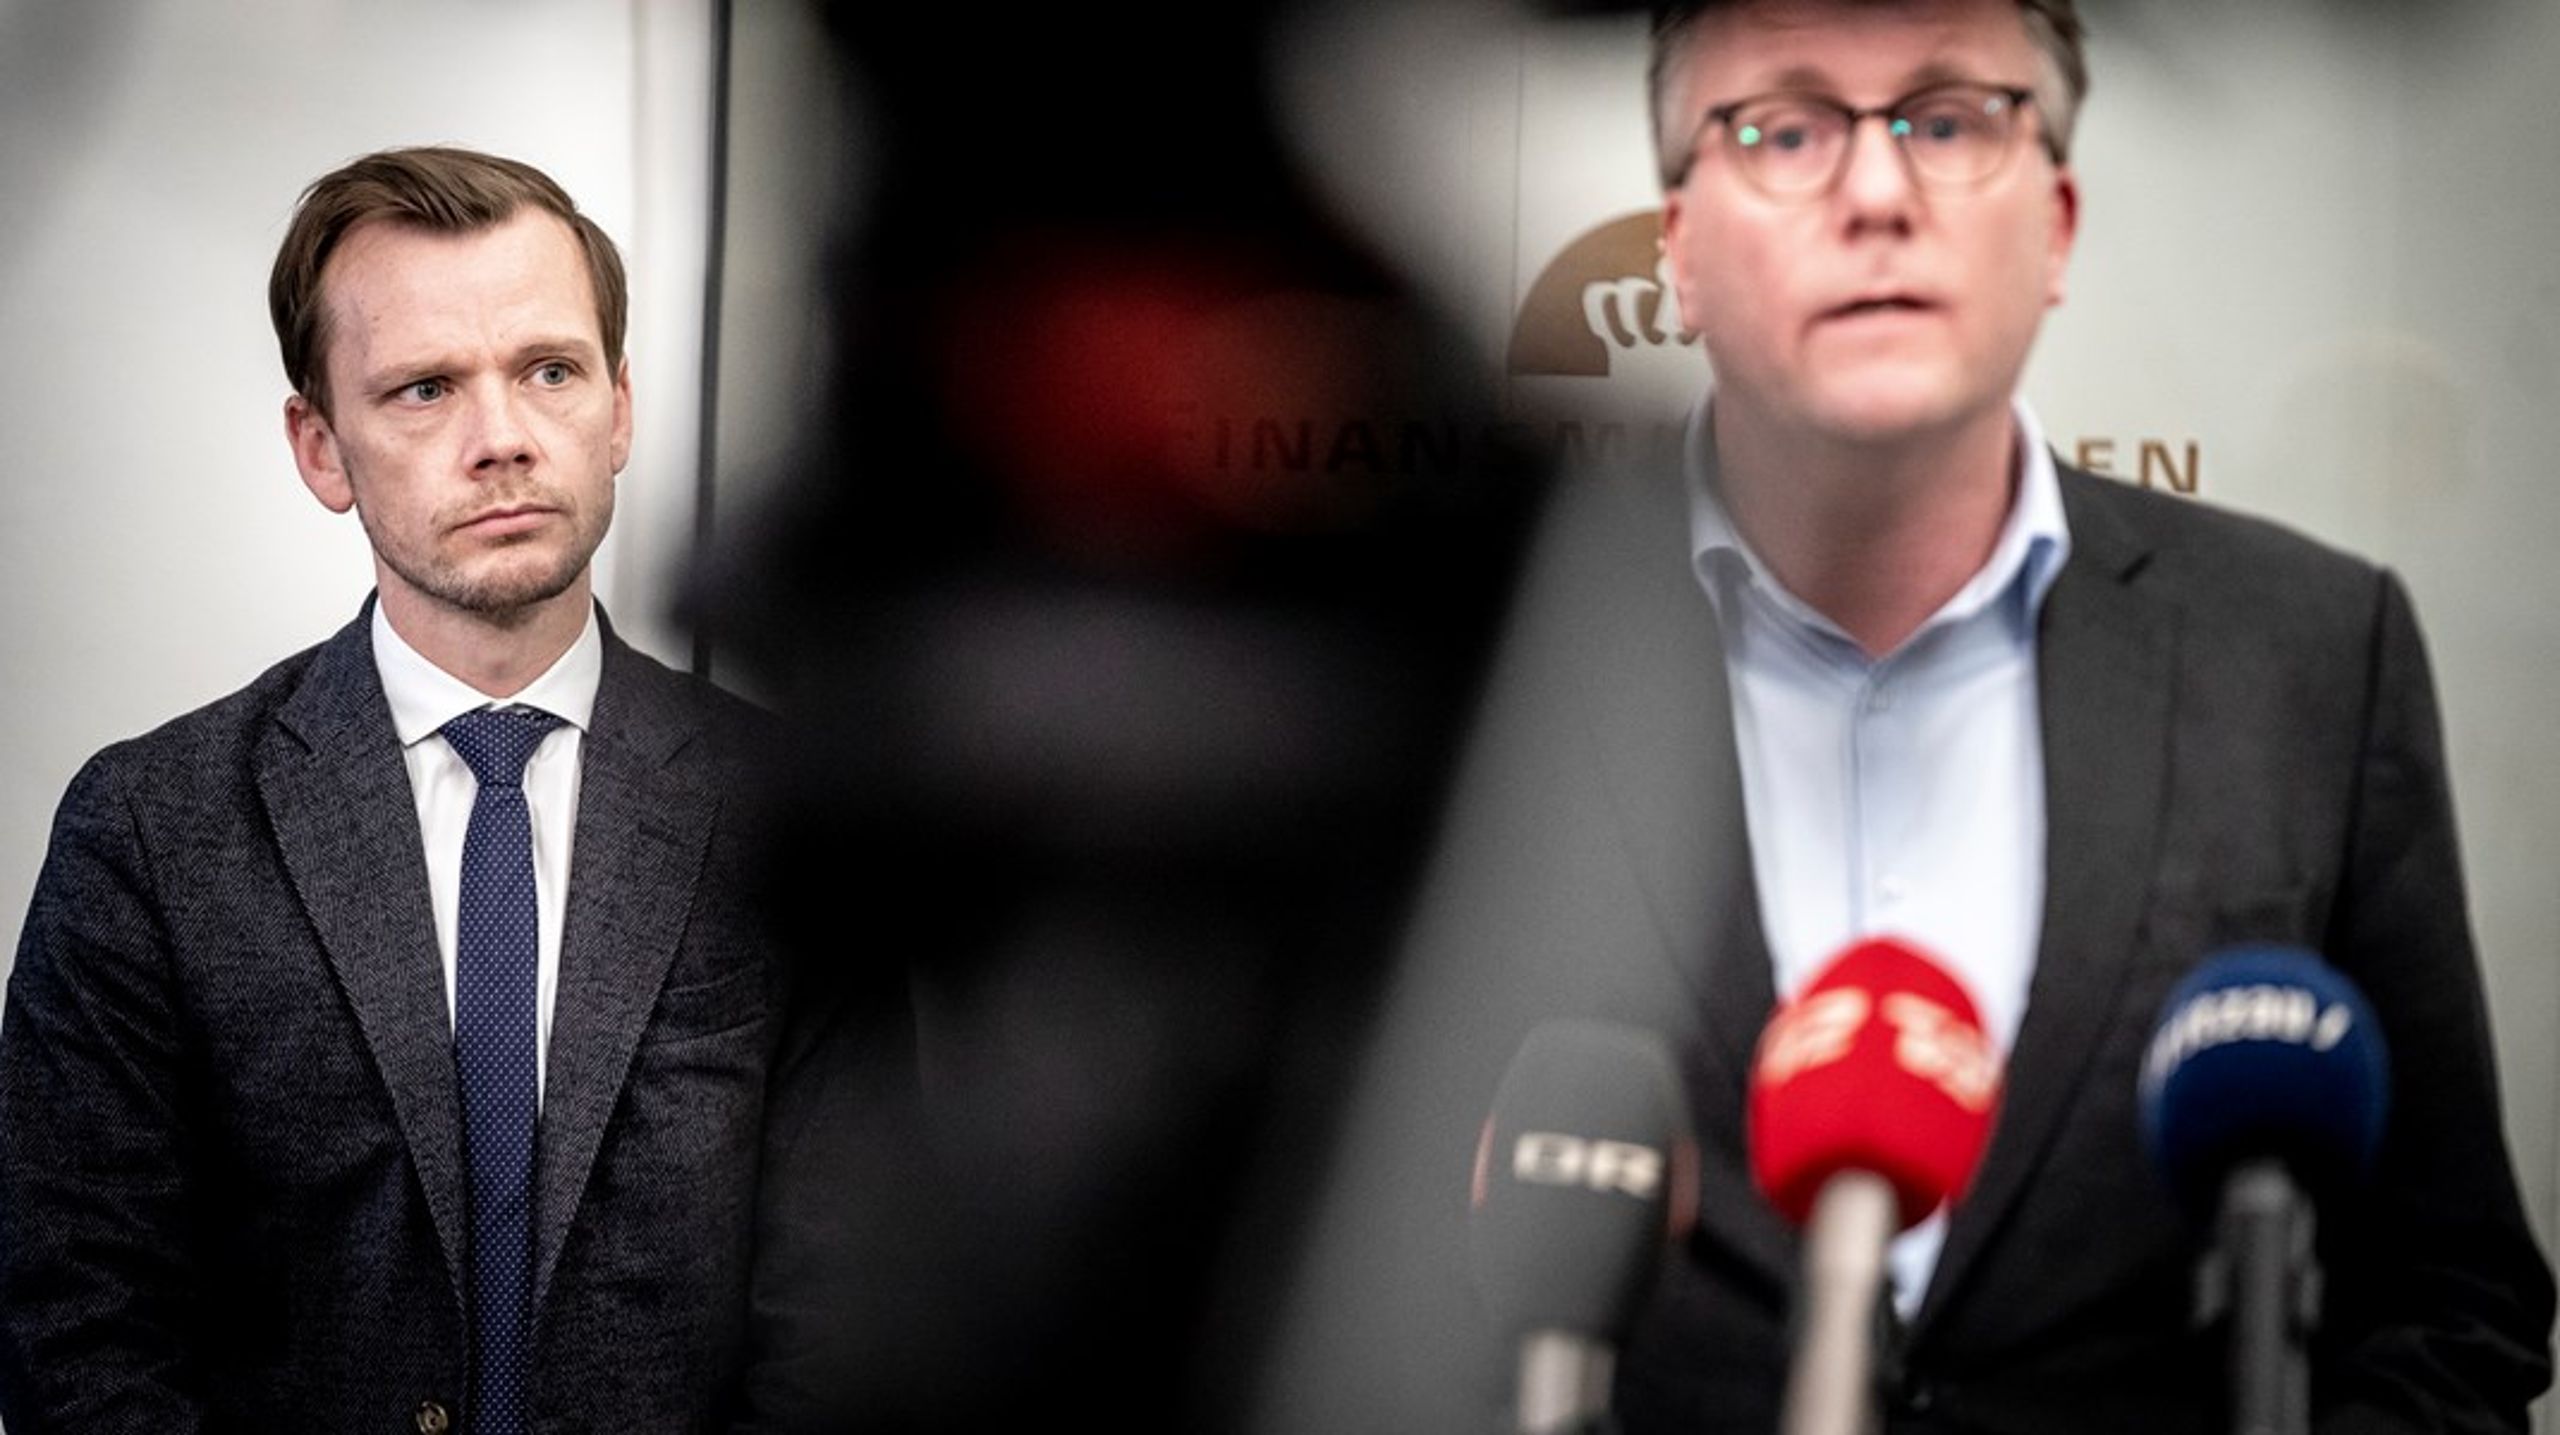 Før Socialdemokratiet kom i regering, fastslog Peter Hummelgaard (S), at "vi vil ikke skattesubsidiere lønvanviddet".